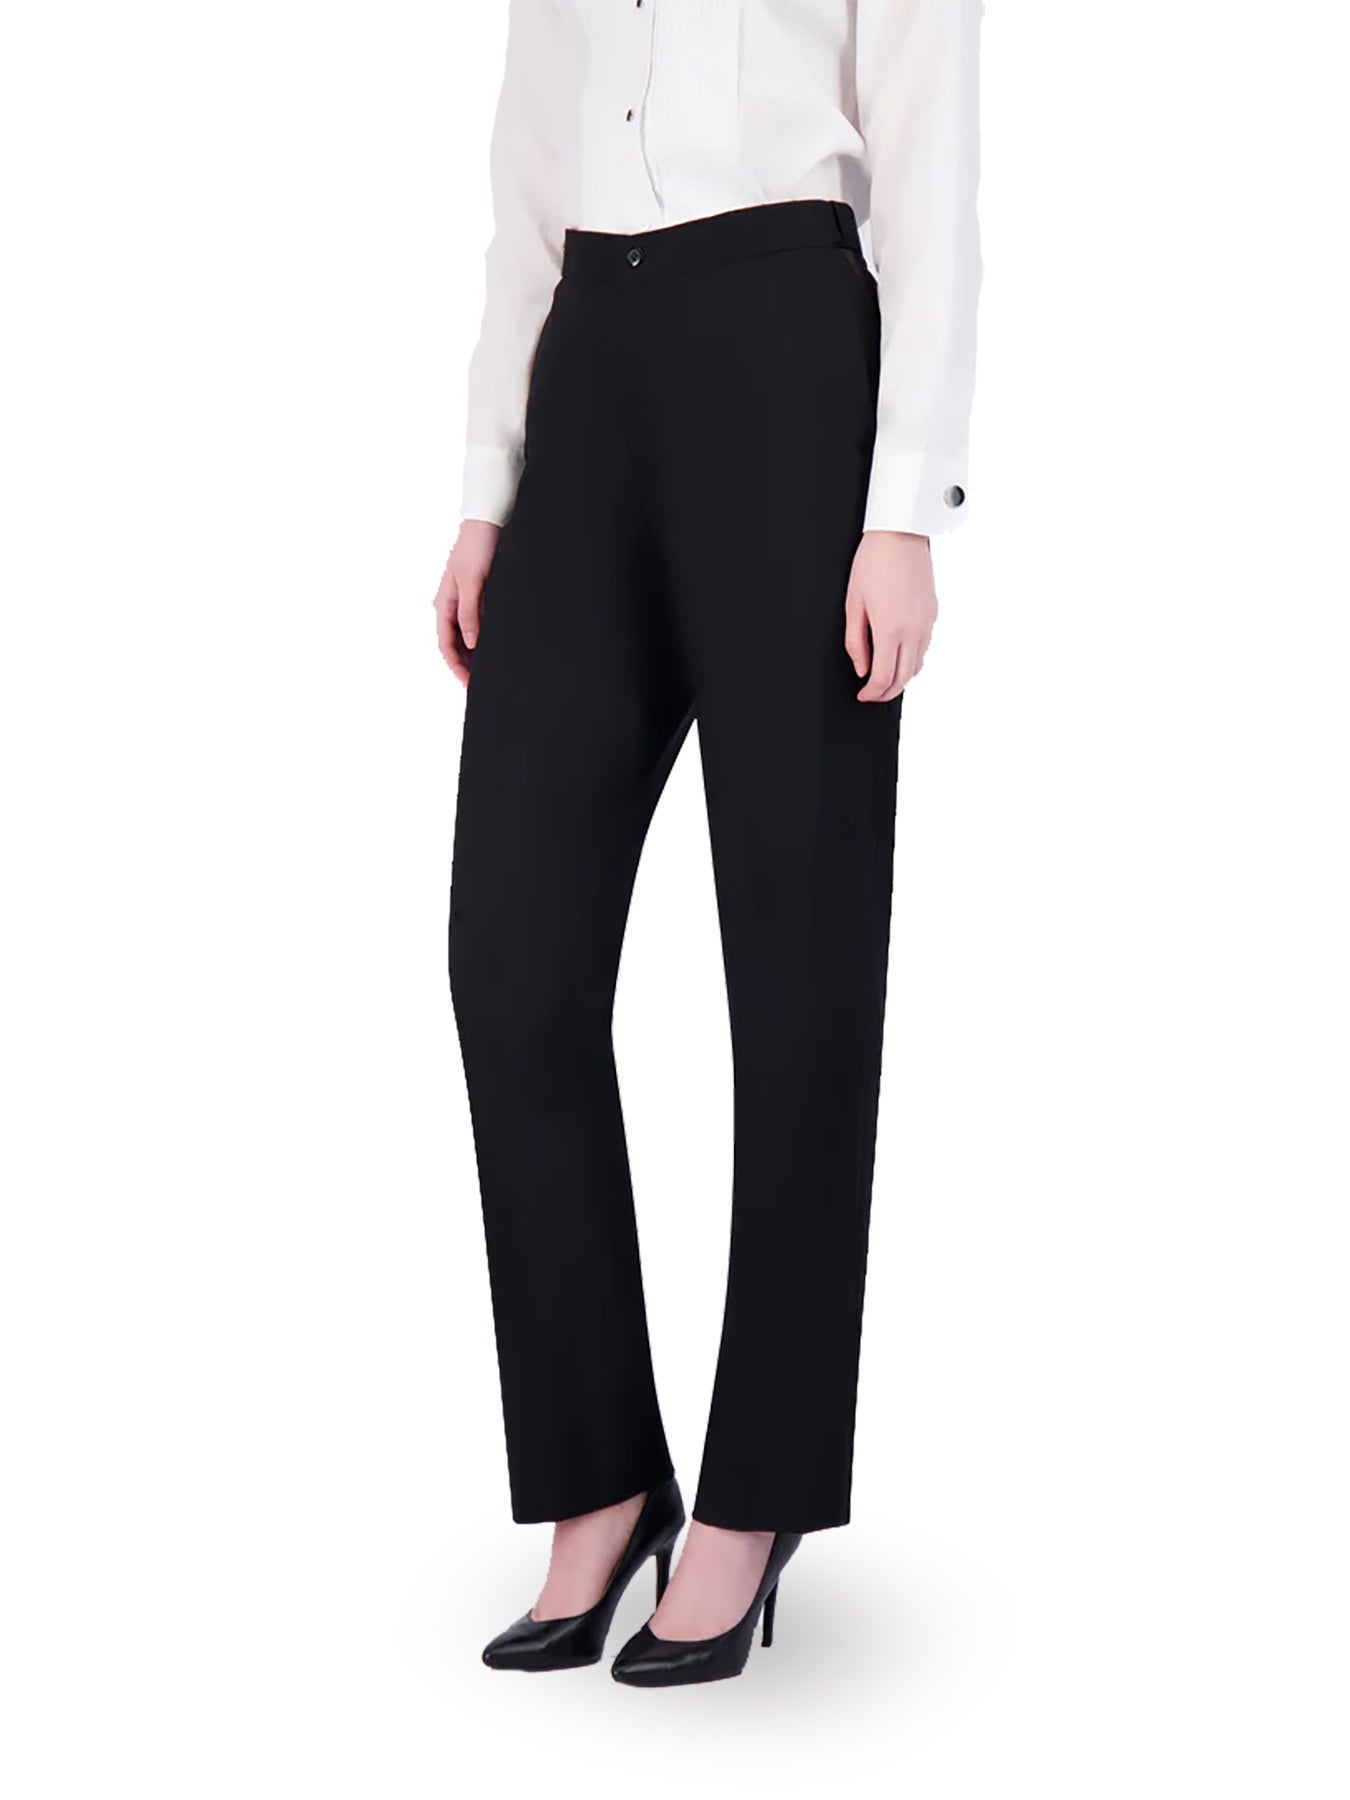 Dress Pants - Black/pinstriped - Ladies | H&M US